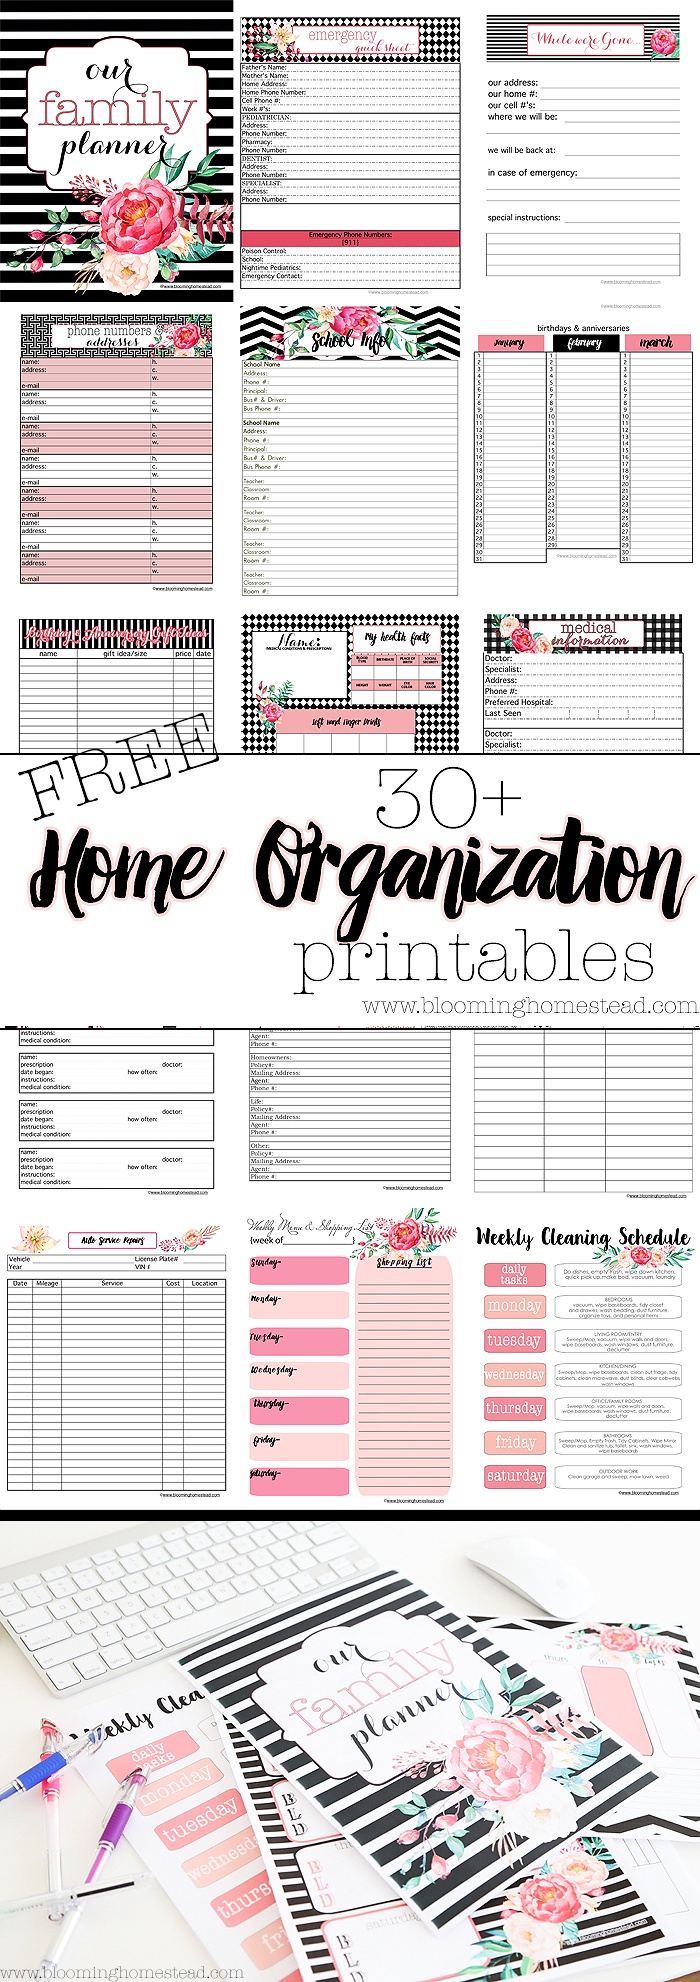 Floral Home Organizational Printables - Blooming Homestead - Free Home Organization Printables